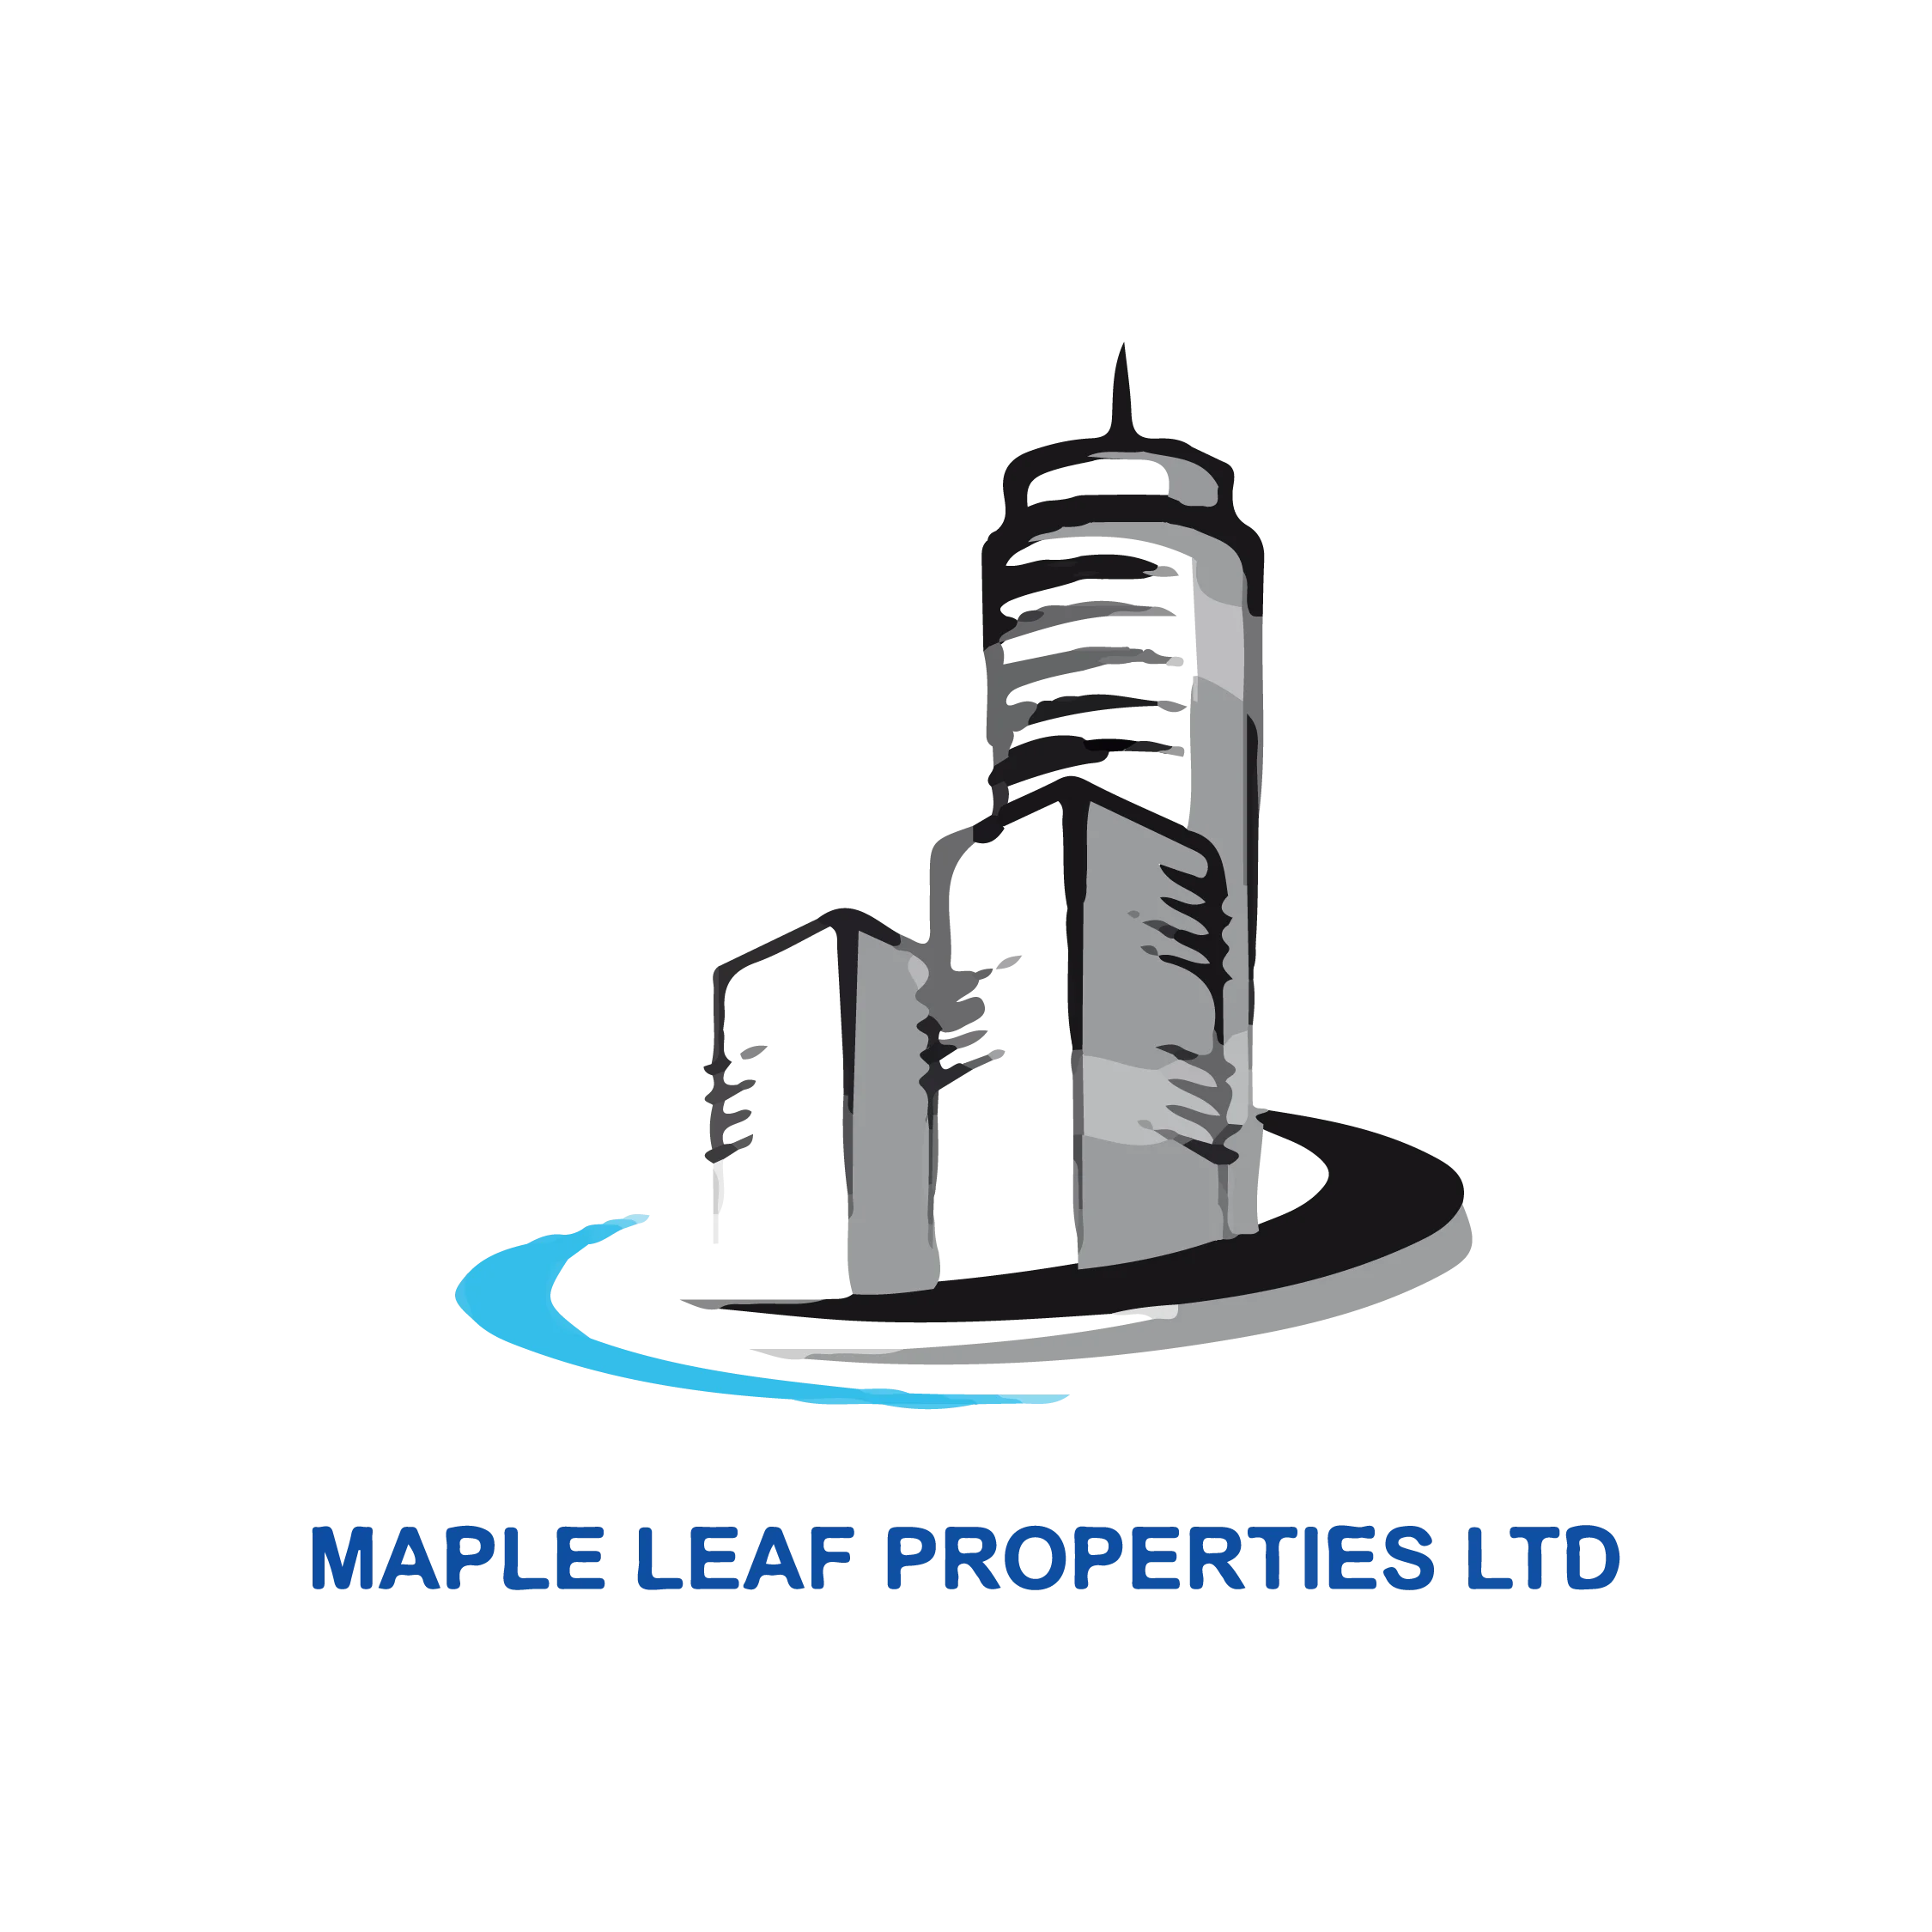 Maple Leaf Properties Ltd